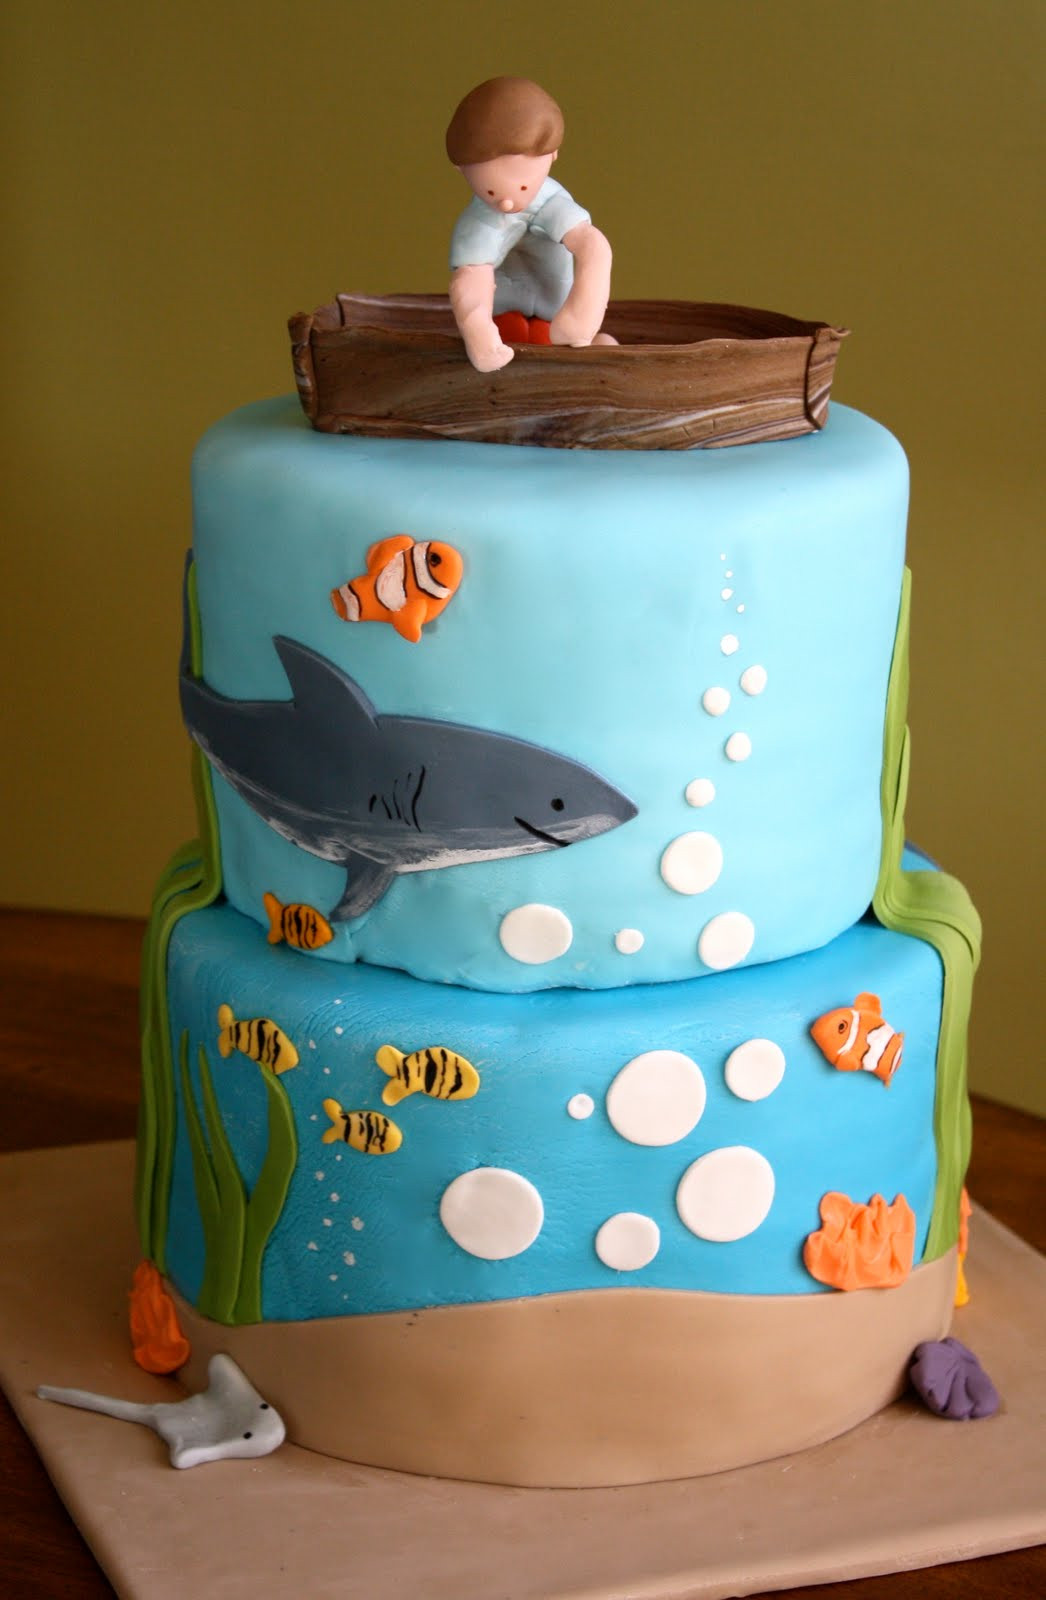 Boy Birthday Cake Ideas
 Baker s Cakes Under the Sea Birthday Cake